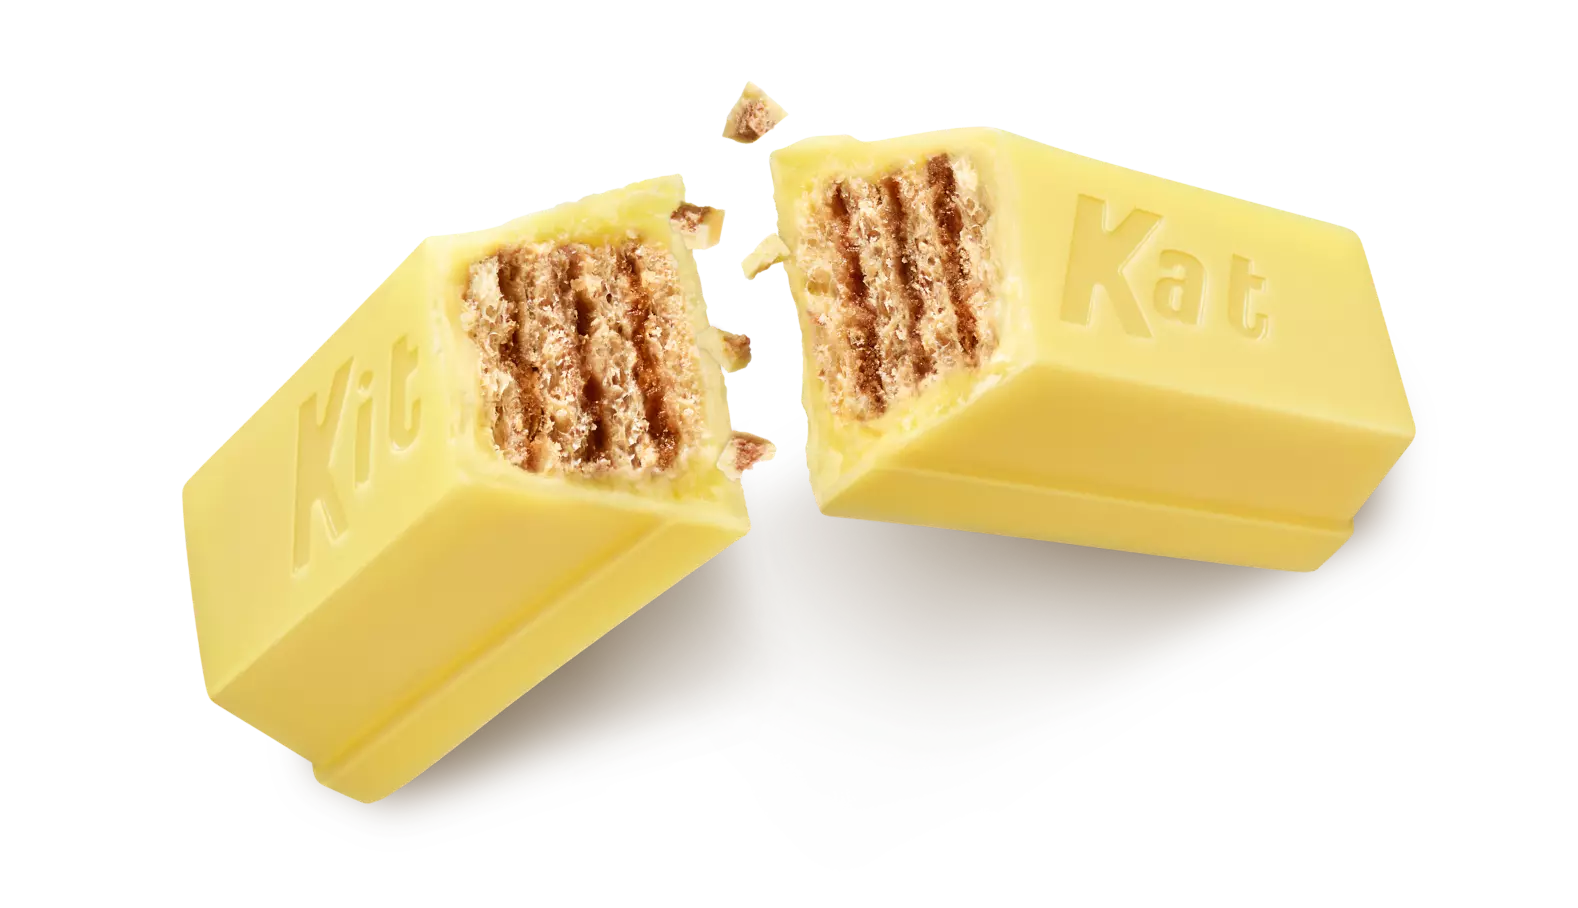 KIT KAT® Lemon Crisp Miniatures Candy Bars, 8.4 oz bag - Out of Package